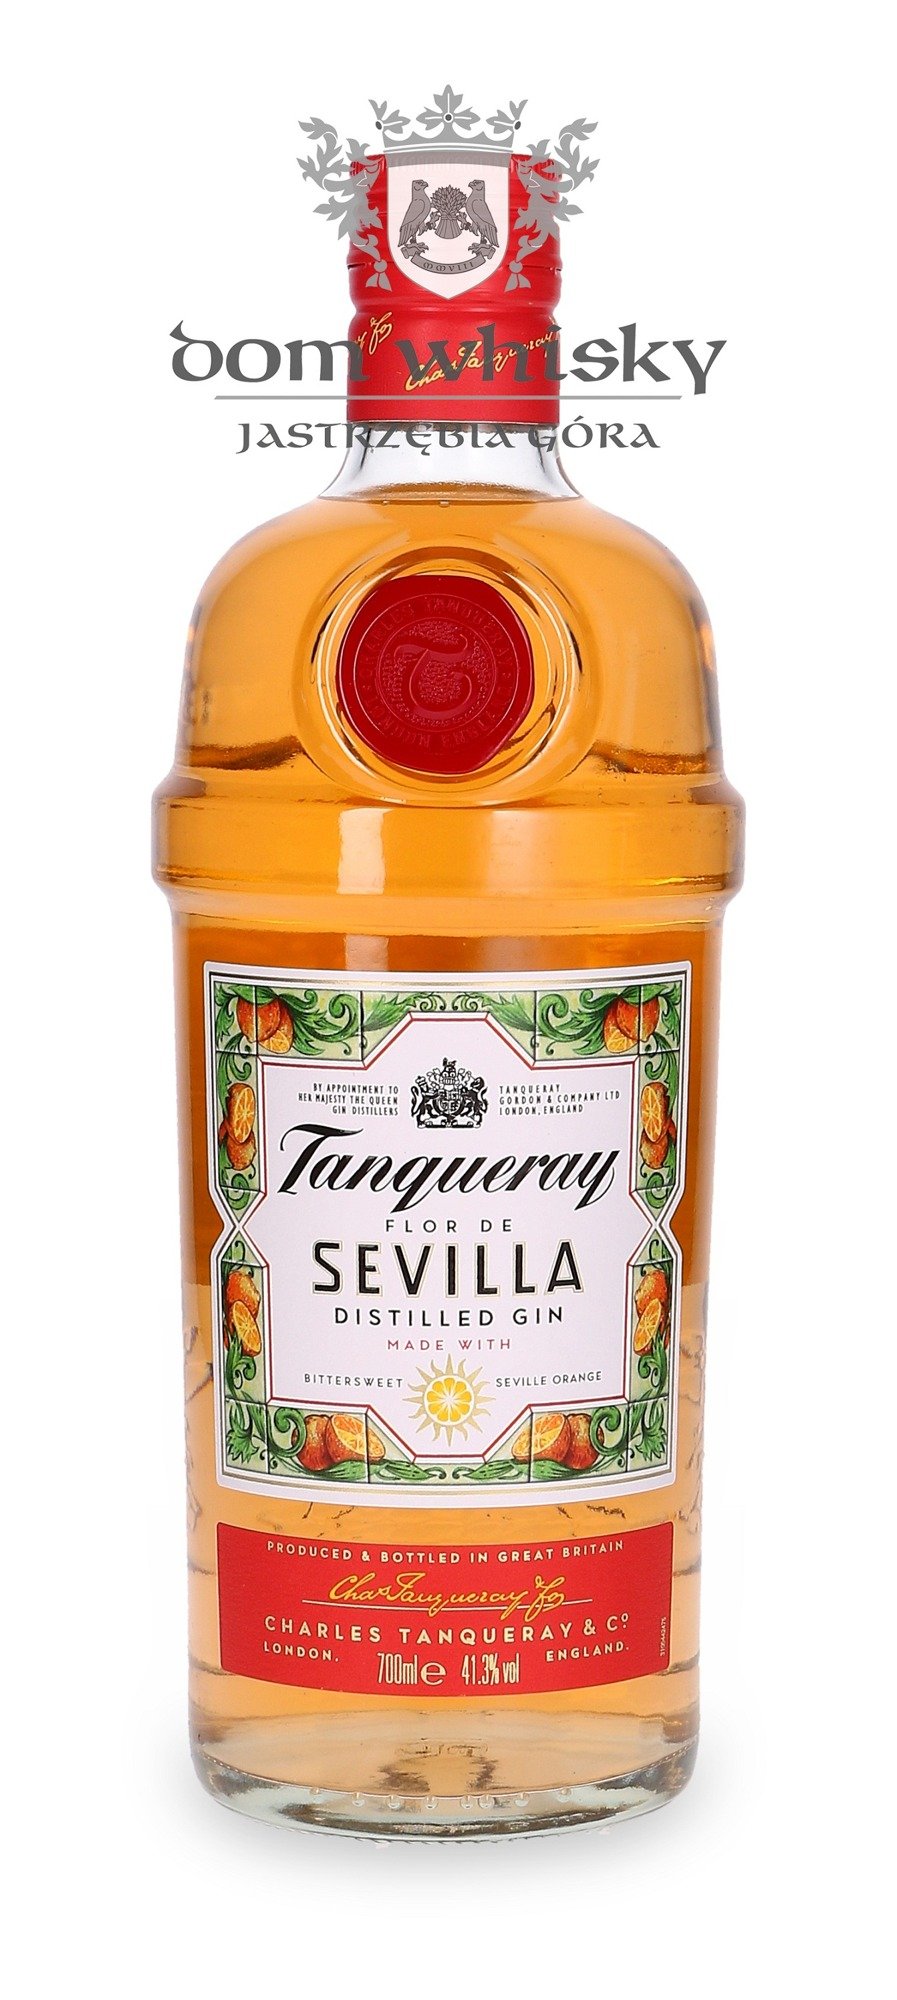 Tanqueray Flor de | Whisky Distilled Dom Sevilla / 0,7l Gin 41,3